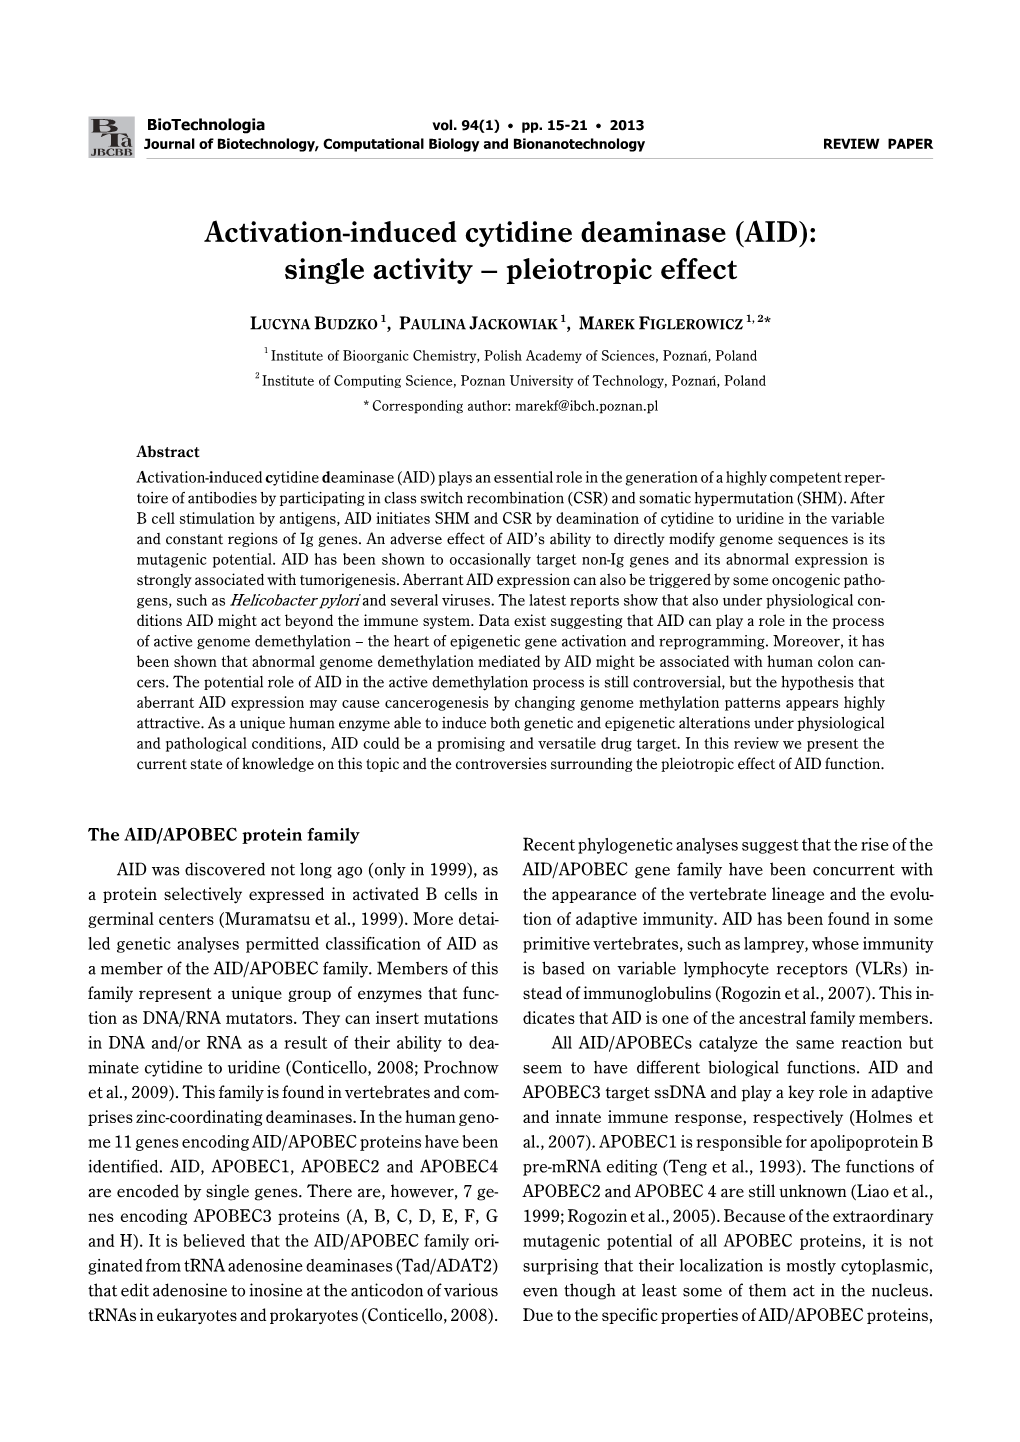 Activation-Induced Cytidine Deaminase (AID): Single Activity – Pleiotropic Effect